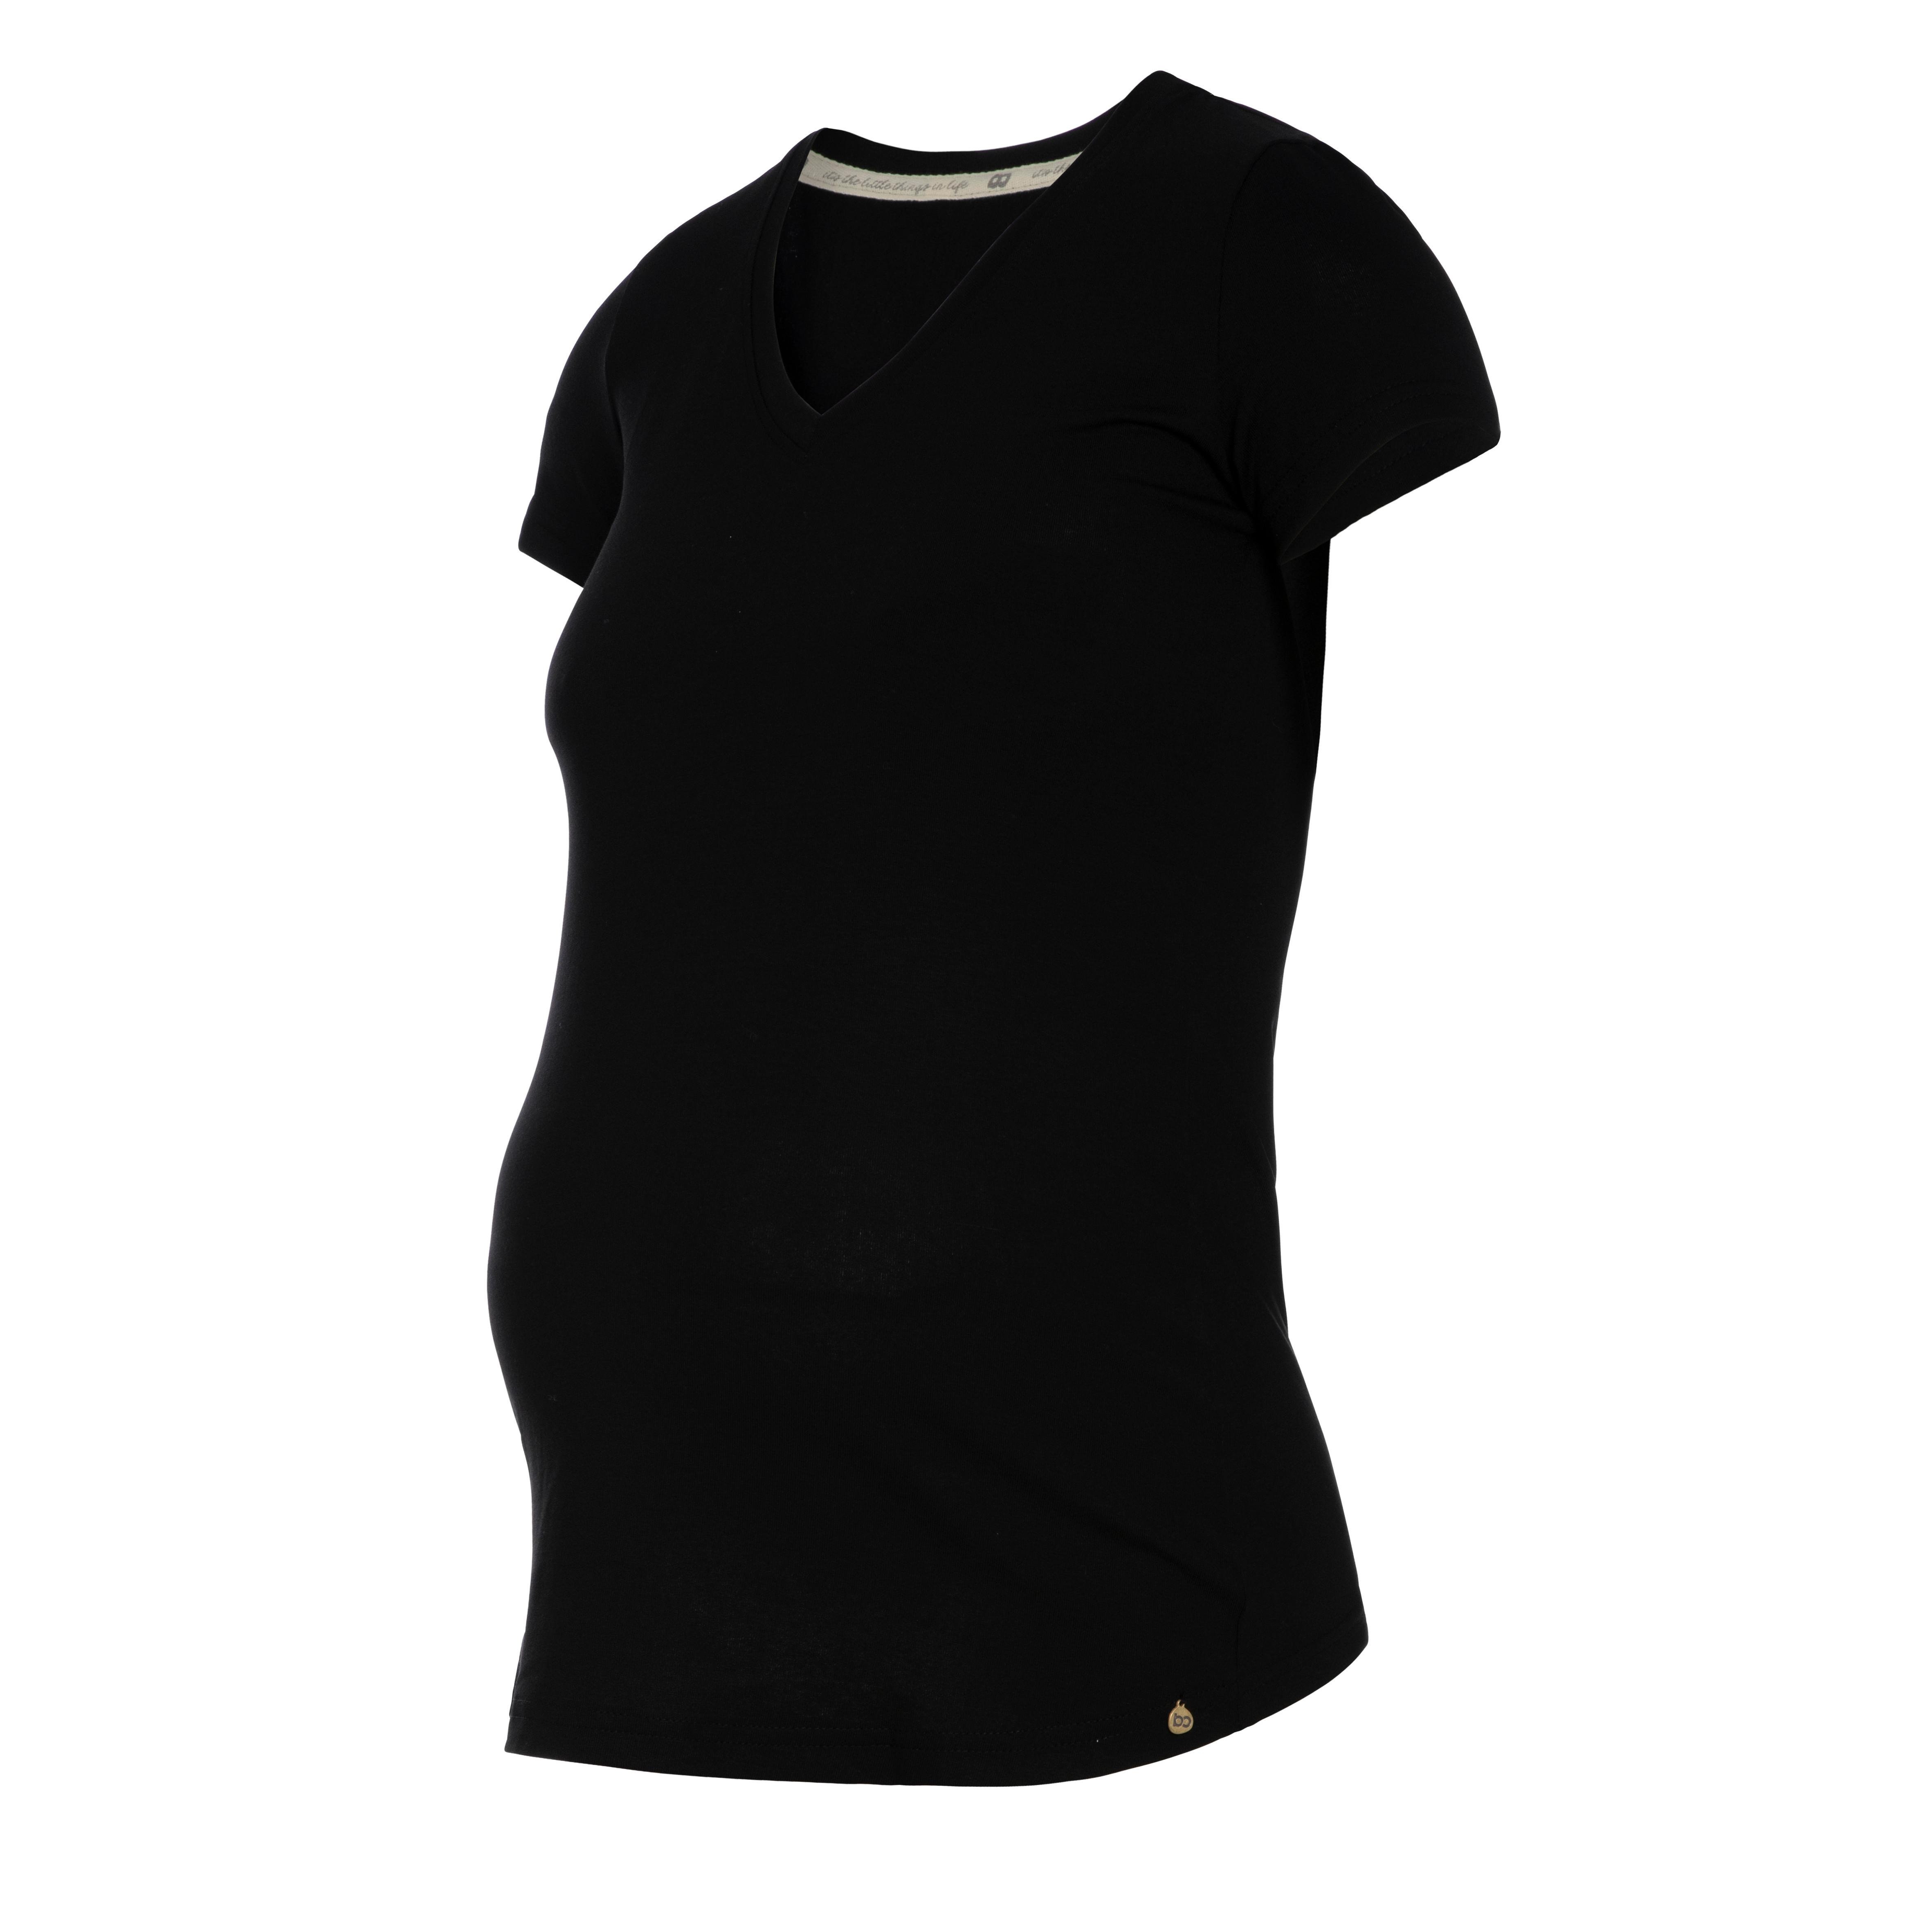 Maternity T-shirt Glow black - XL